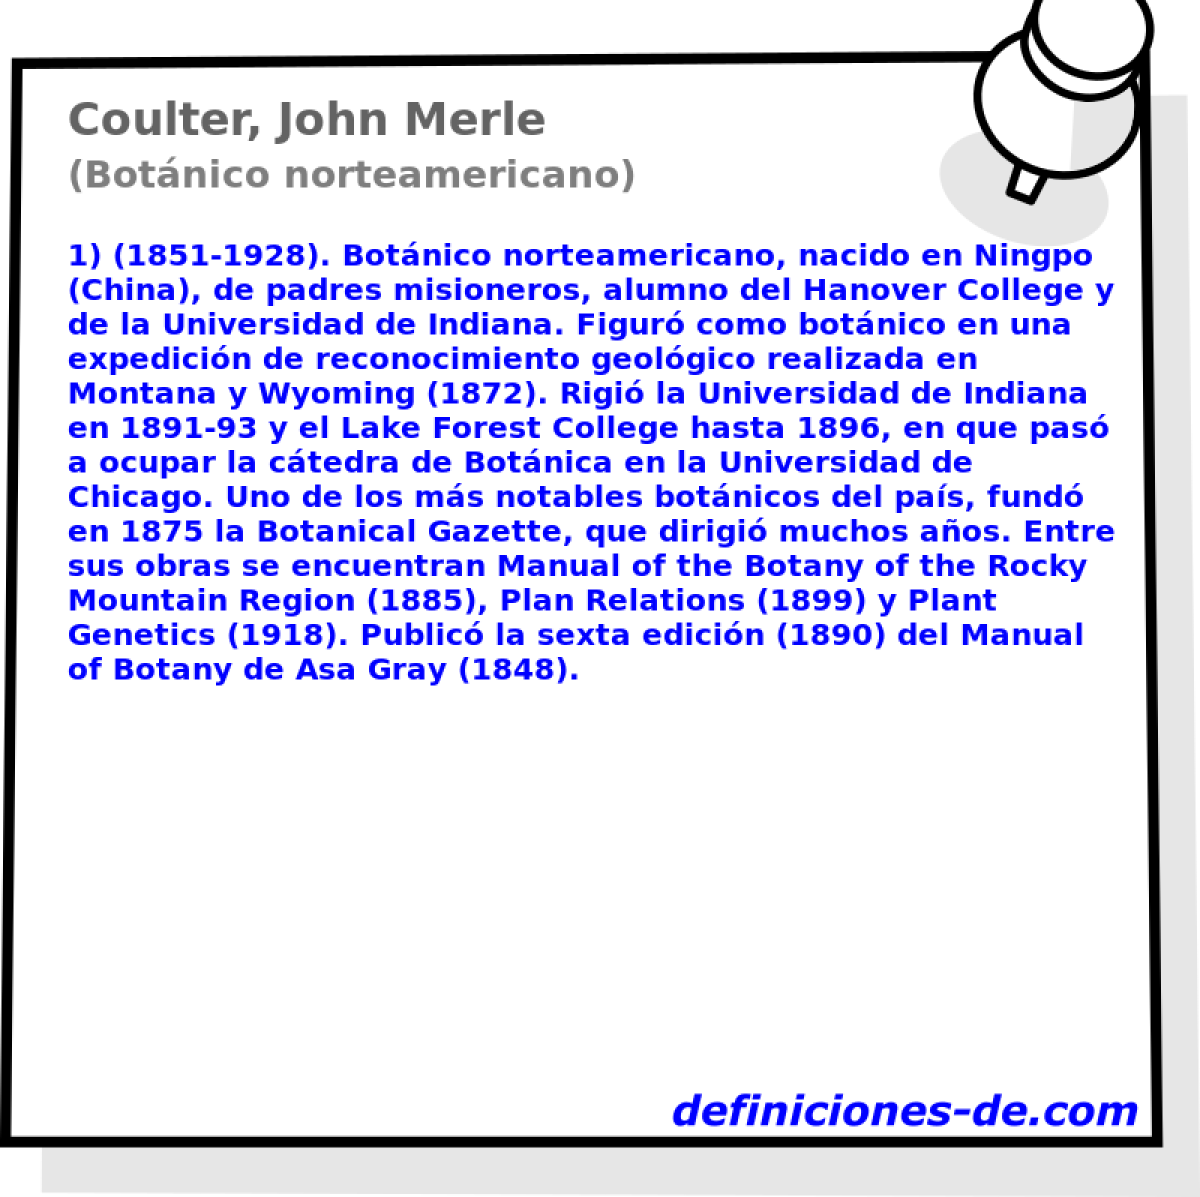 Coulter, John Merle (Botnico norteamericano)